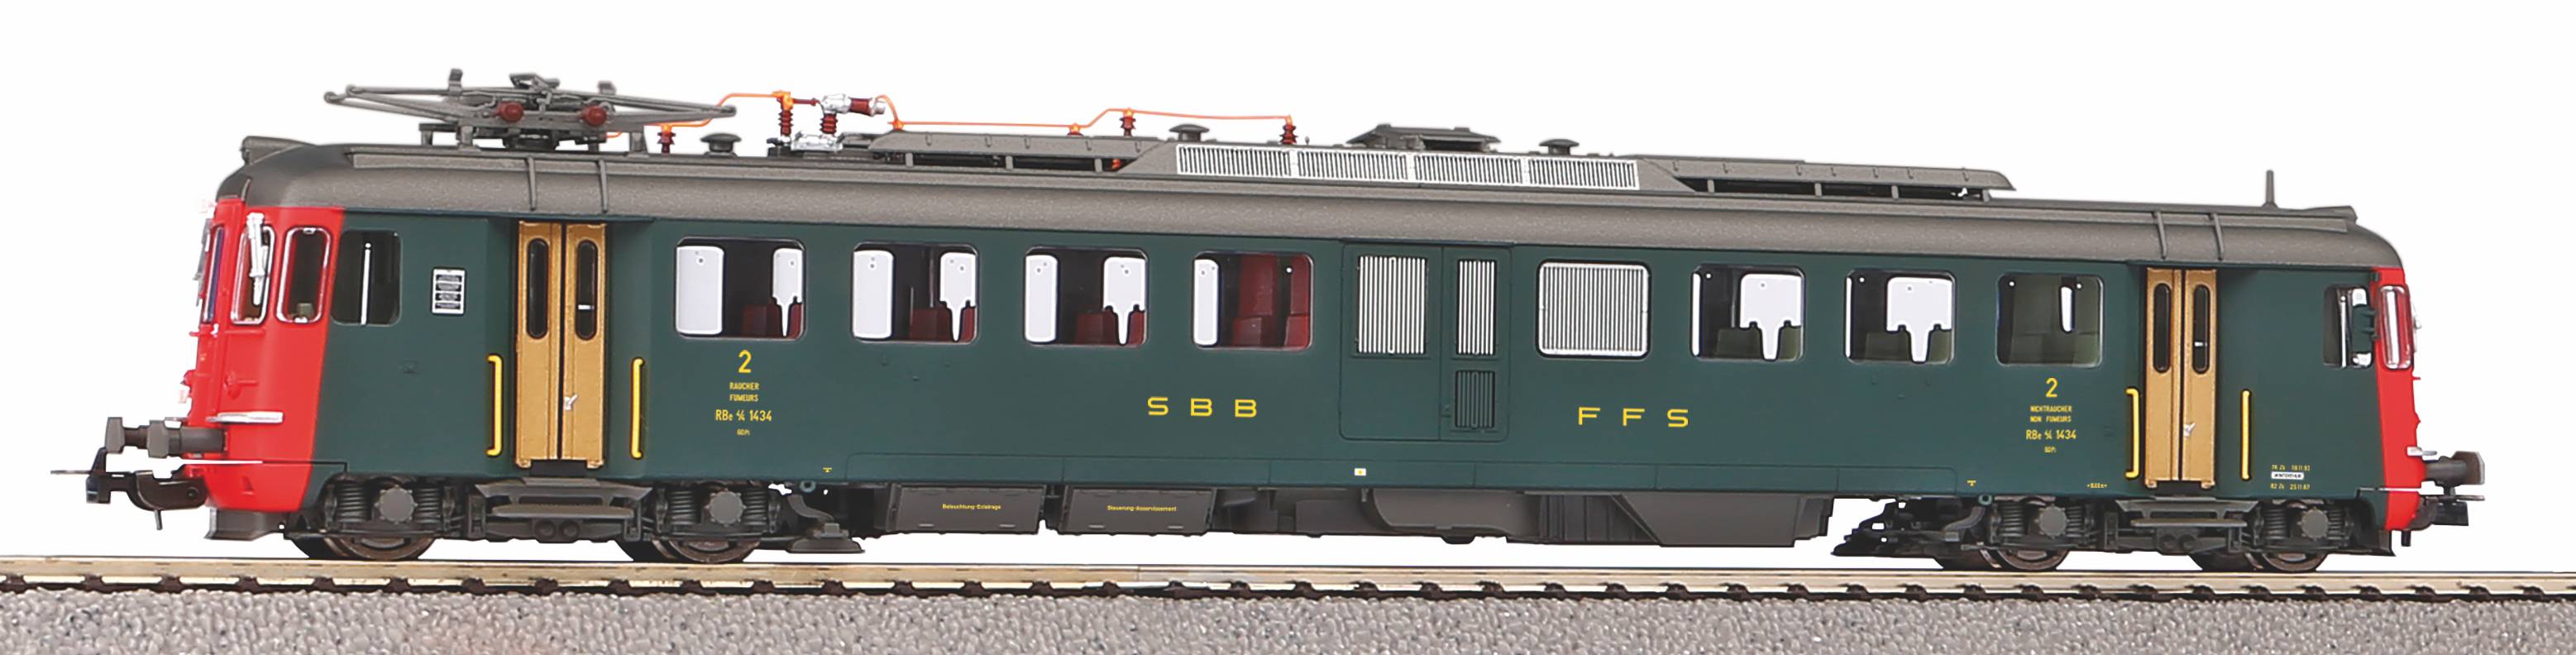 Piko 96822 H0 Triebzug RBe 4/4 2.Serie grün, alte Schrift SBB IV + DSS PluX22